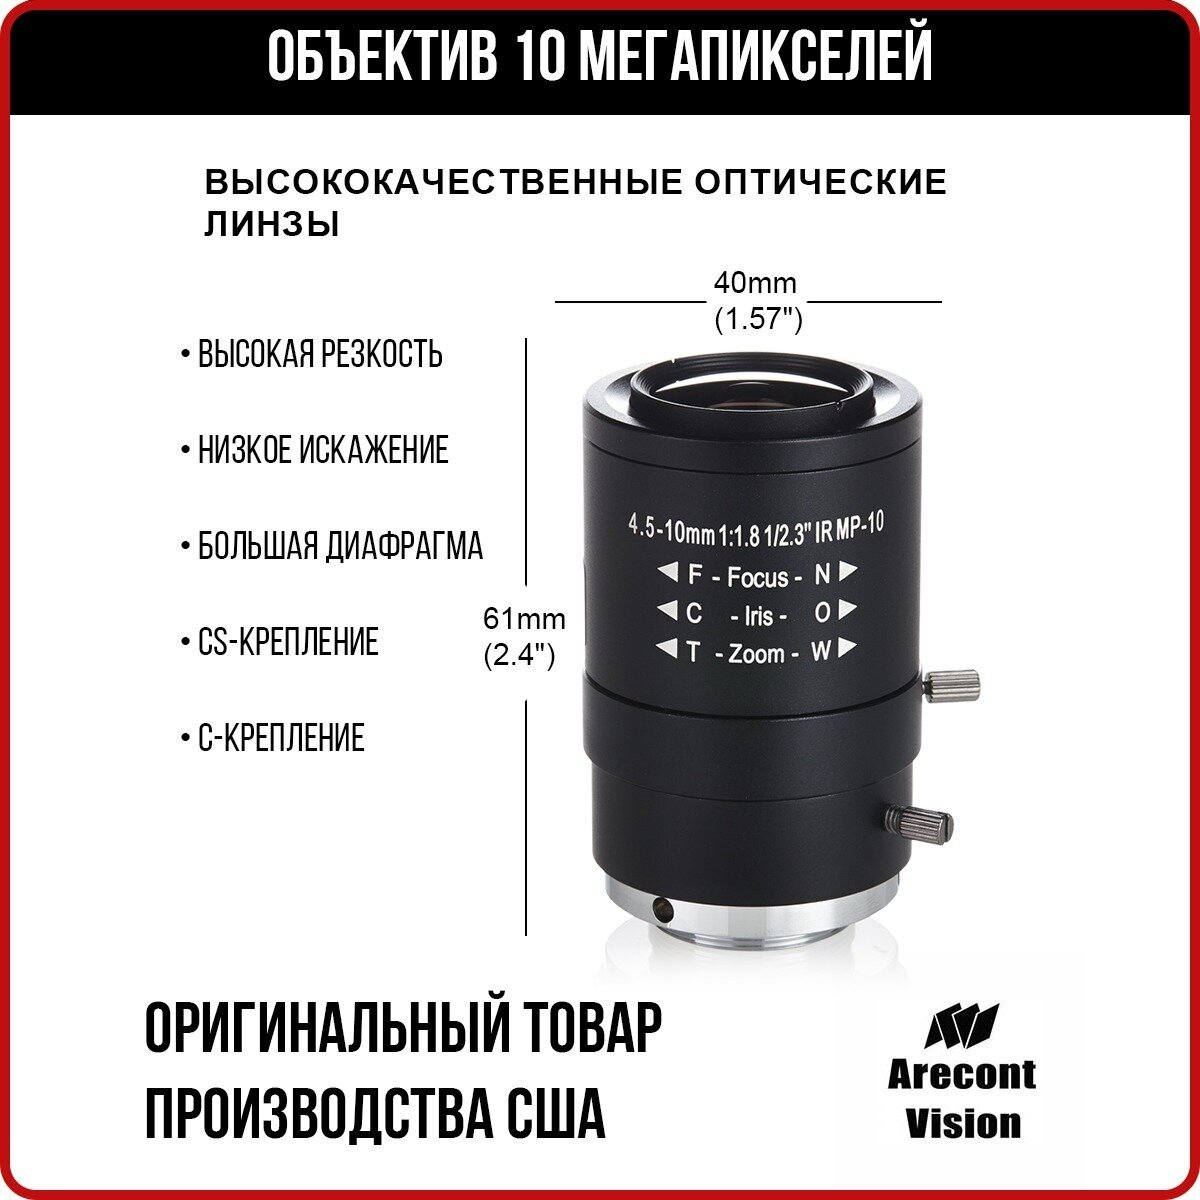 Объектив Arecont Vision Delax Market 10 mpix UHD 4.5-10 mm 1/2.3" черный